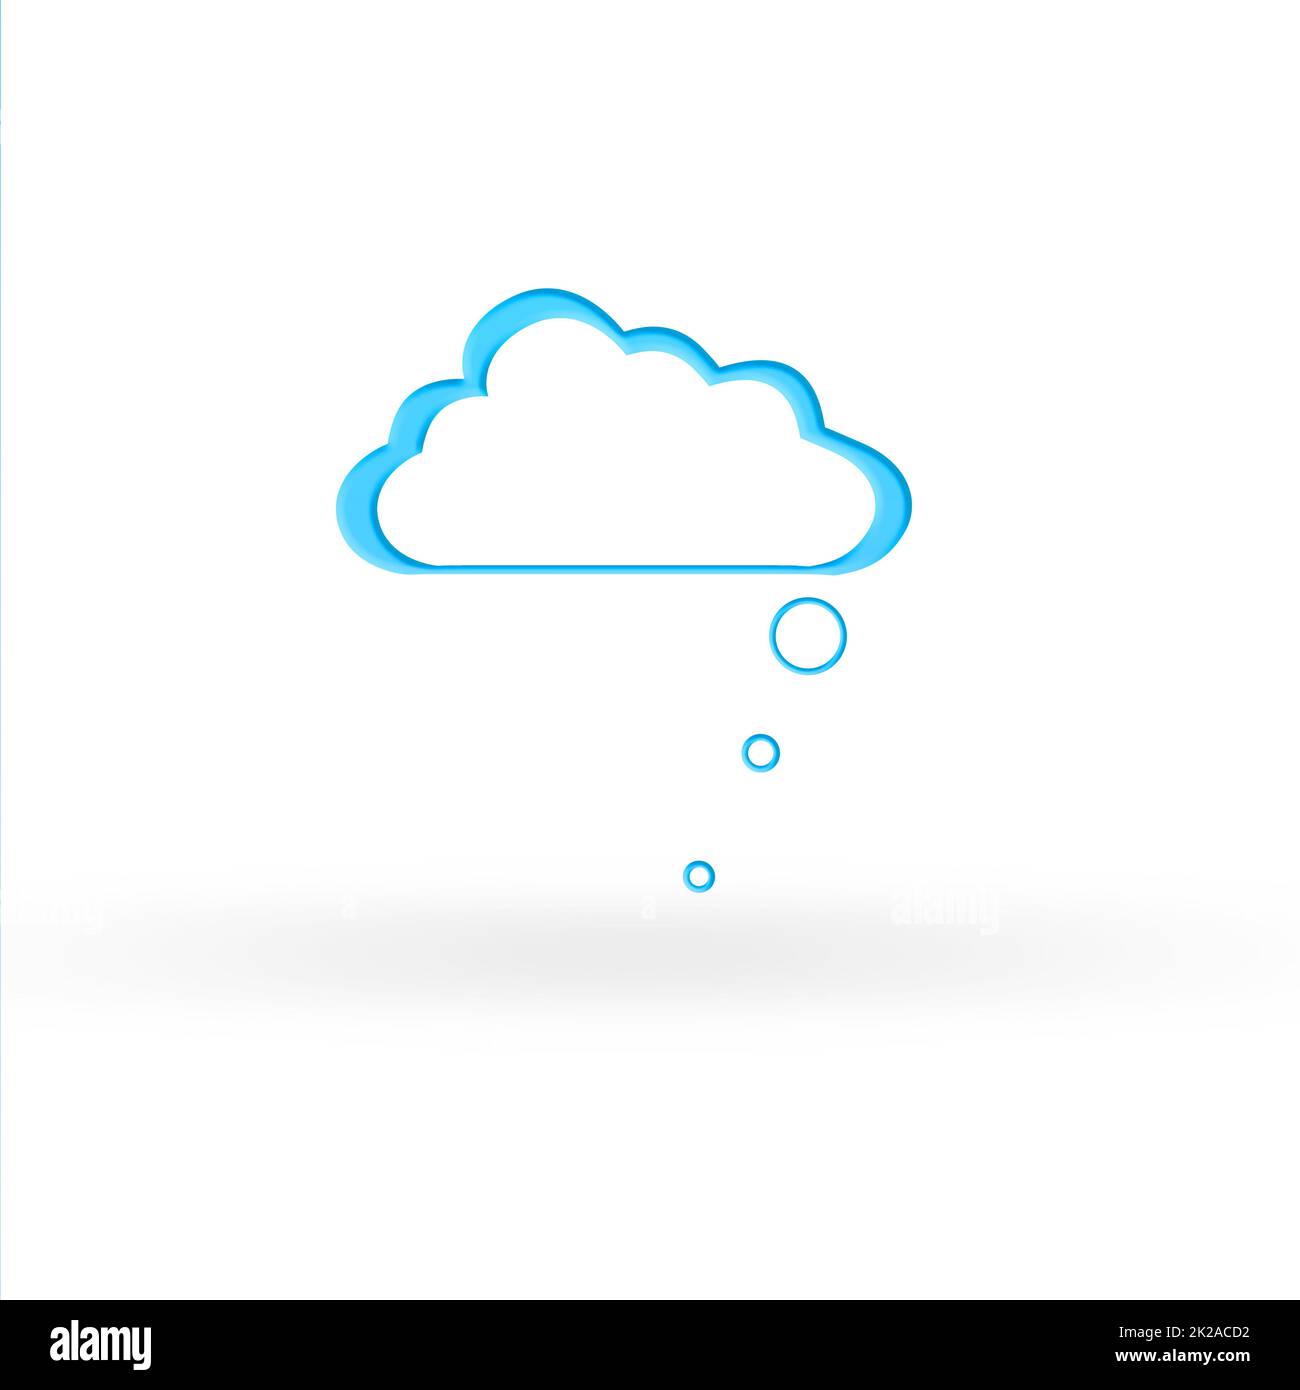 Ideen Konzeptuelles Bild, das modernes Cloud-Computing darstellt. Stockfoto